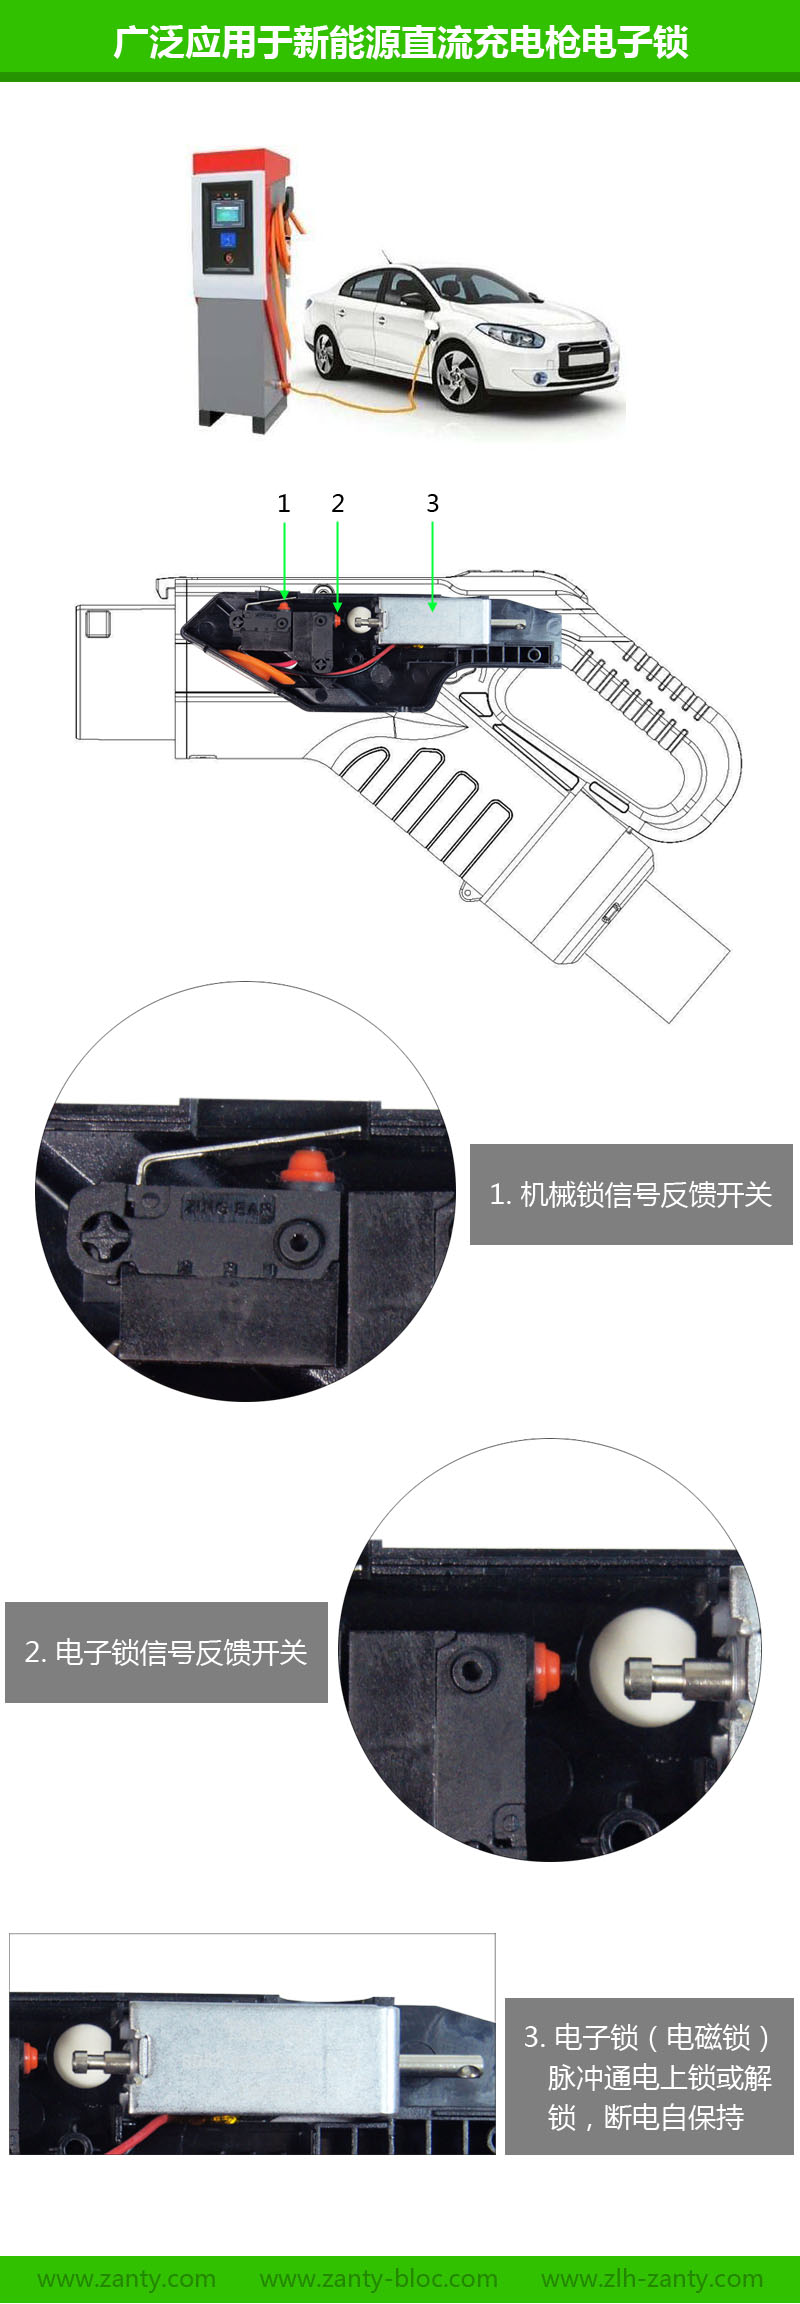 SDK2-0625S雙保持電磁鐵 雙向自保持式小型雙穩態推拉電磁鐵螺線管